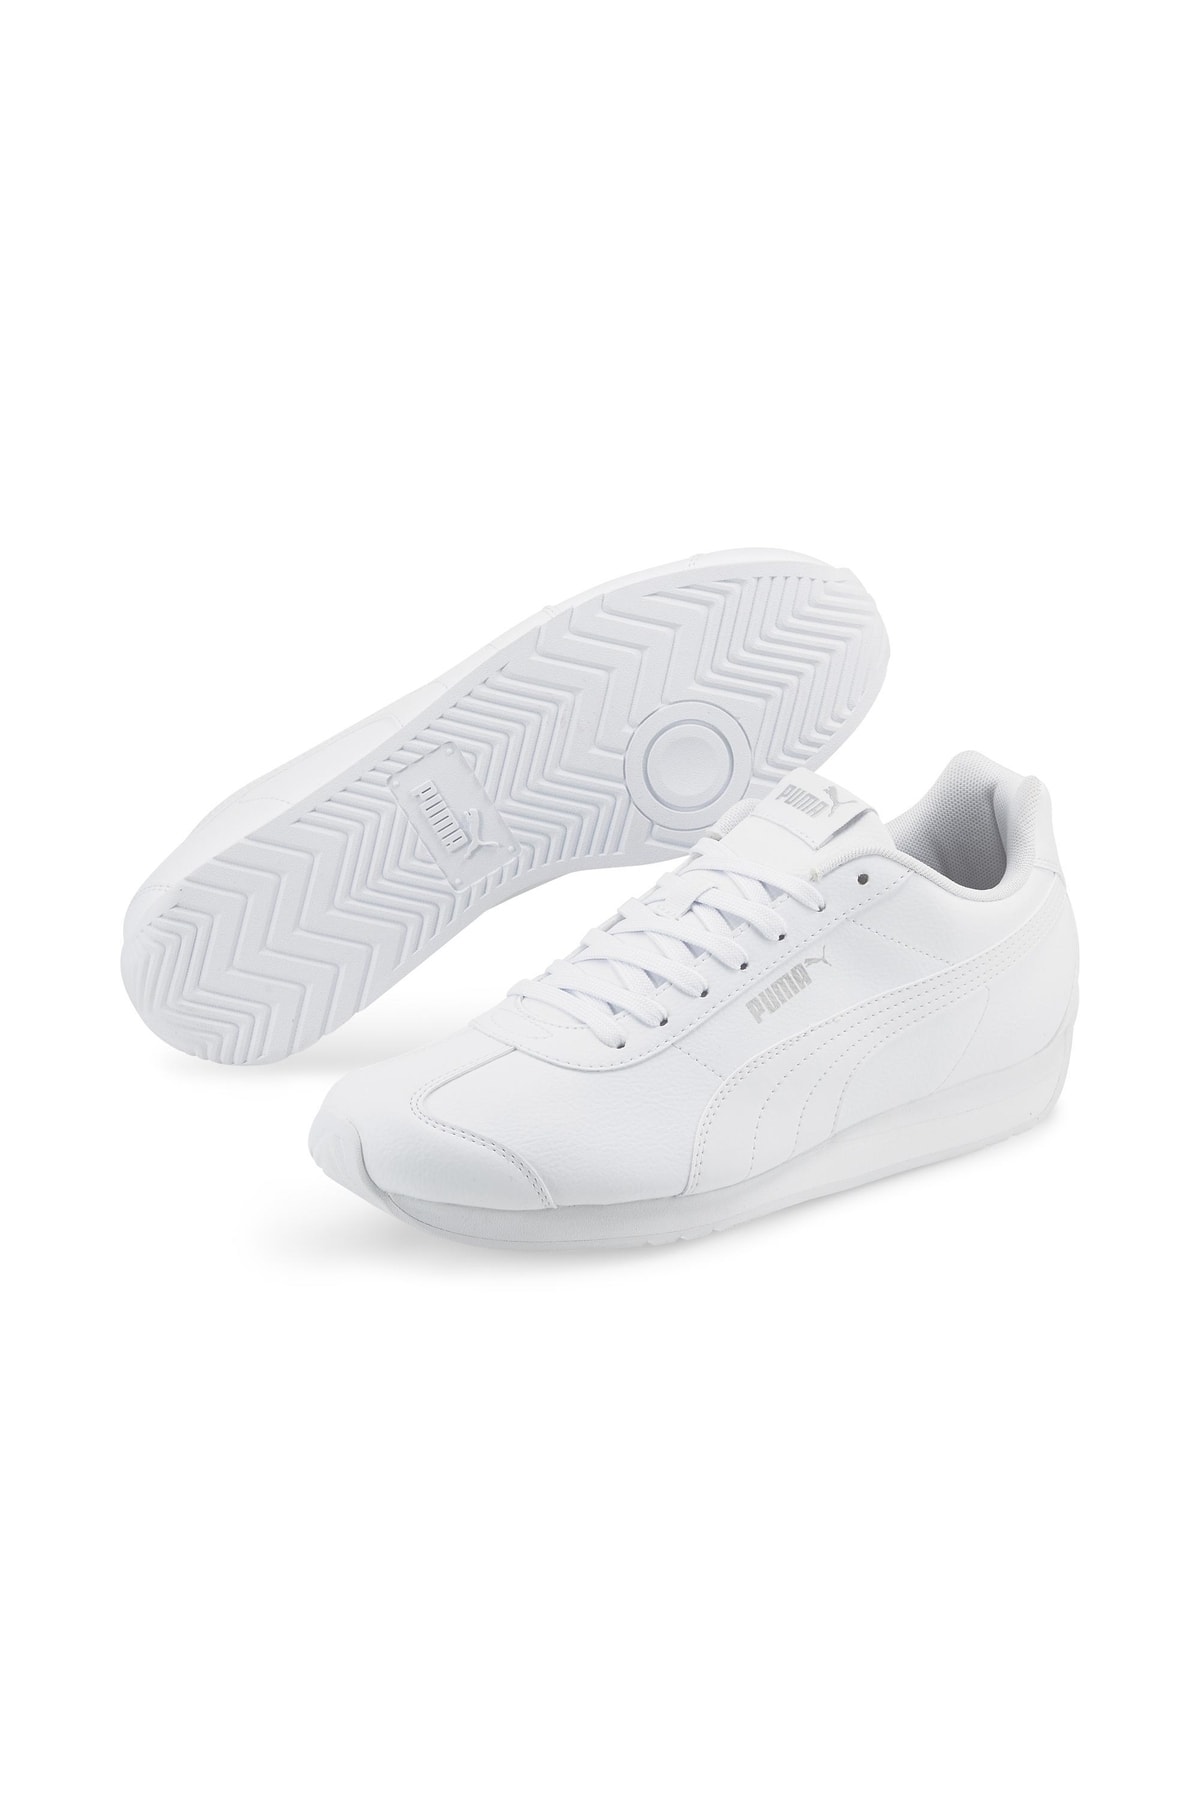 Puma Turin II White Black NWT Size 10 1/2 | Black shoes men, White puma  sneakers, Blue sneakers